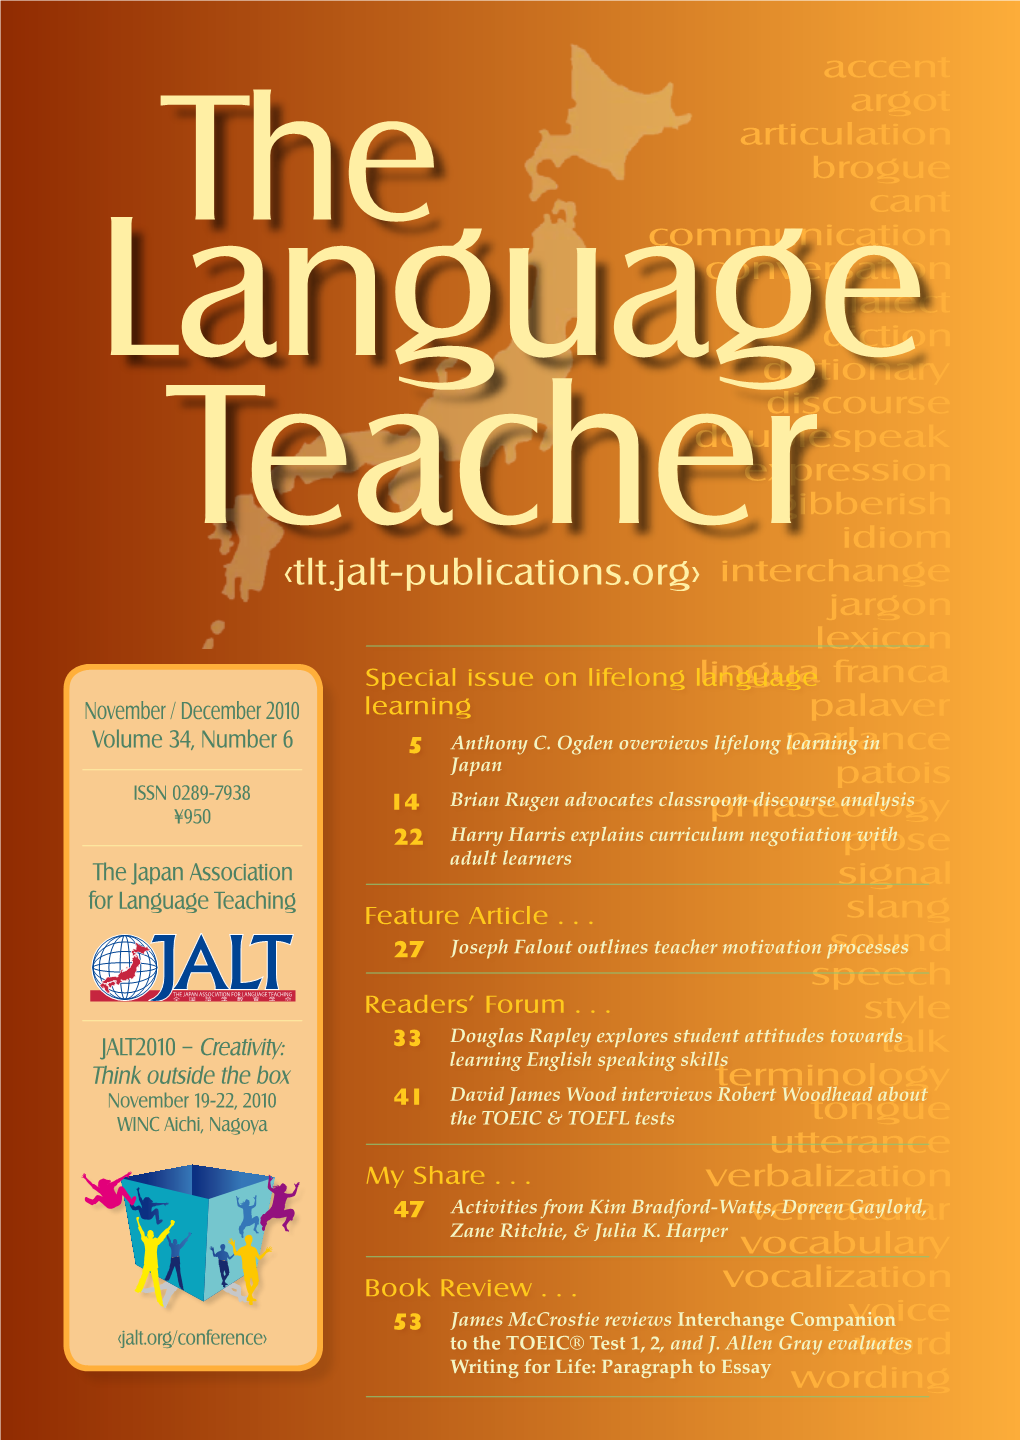 The Japan Association for Language Teaching 全 国 語 学 教 育 学 会